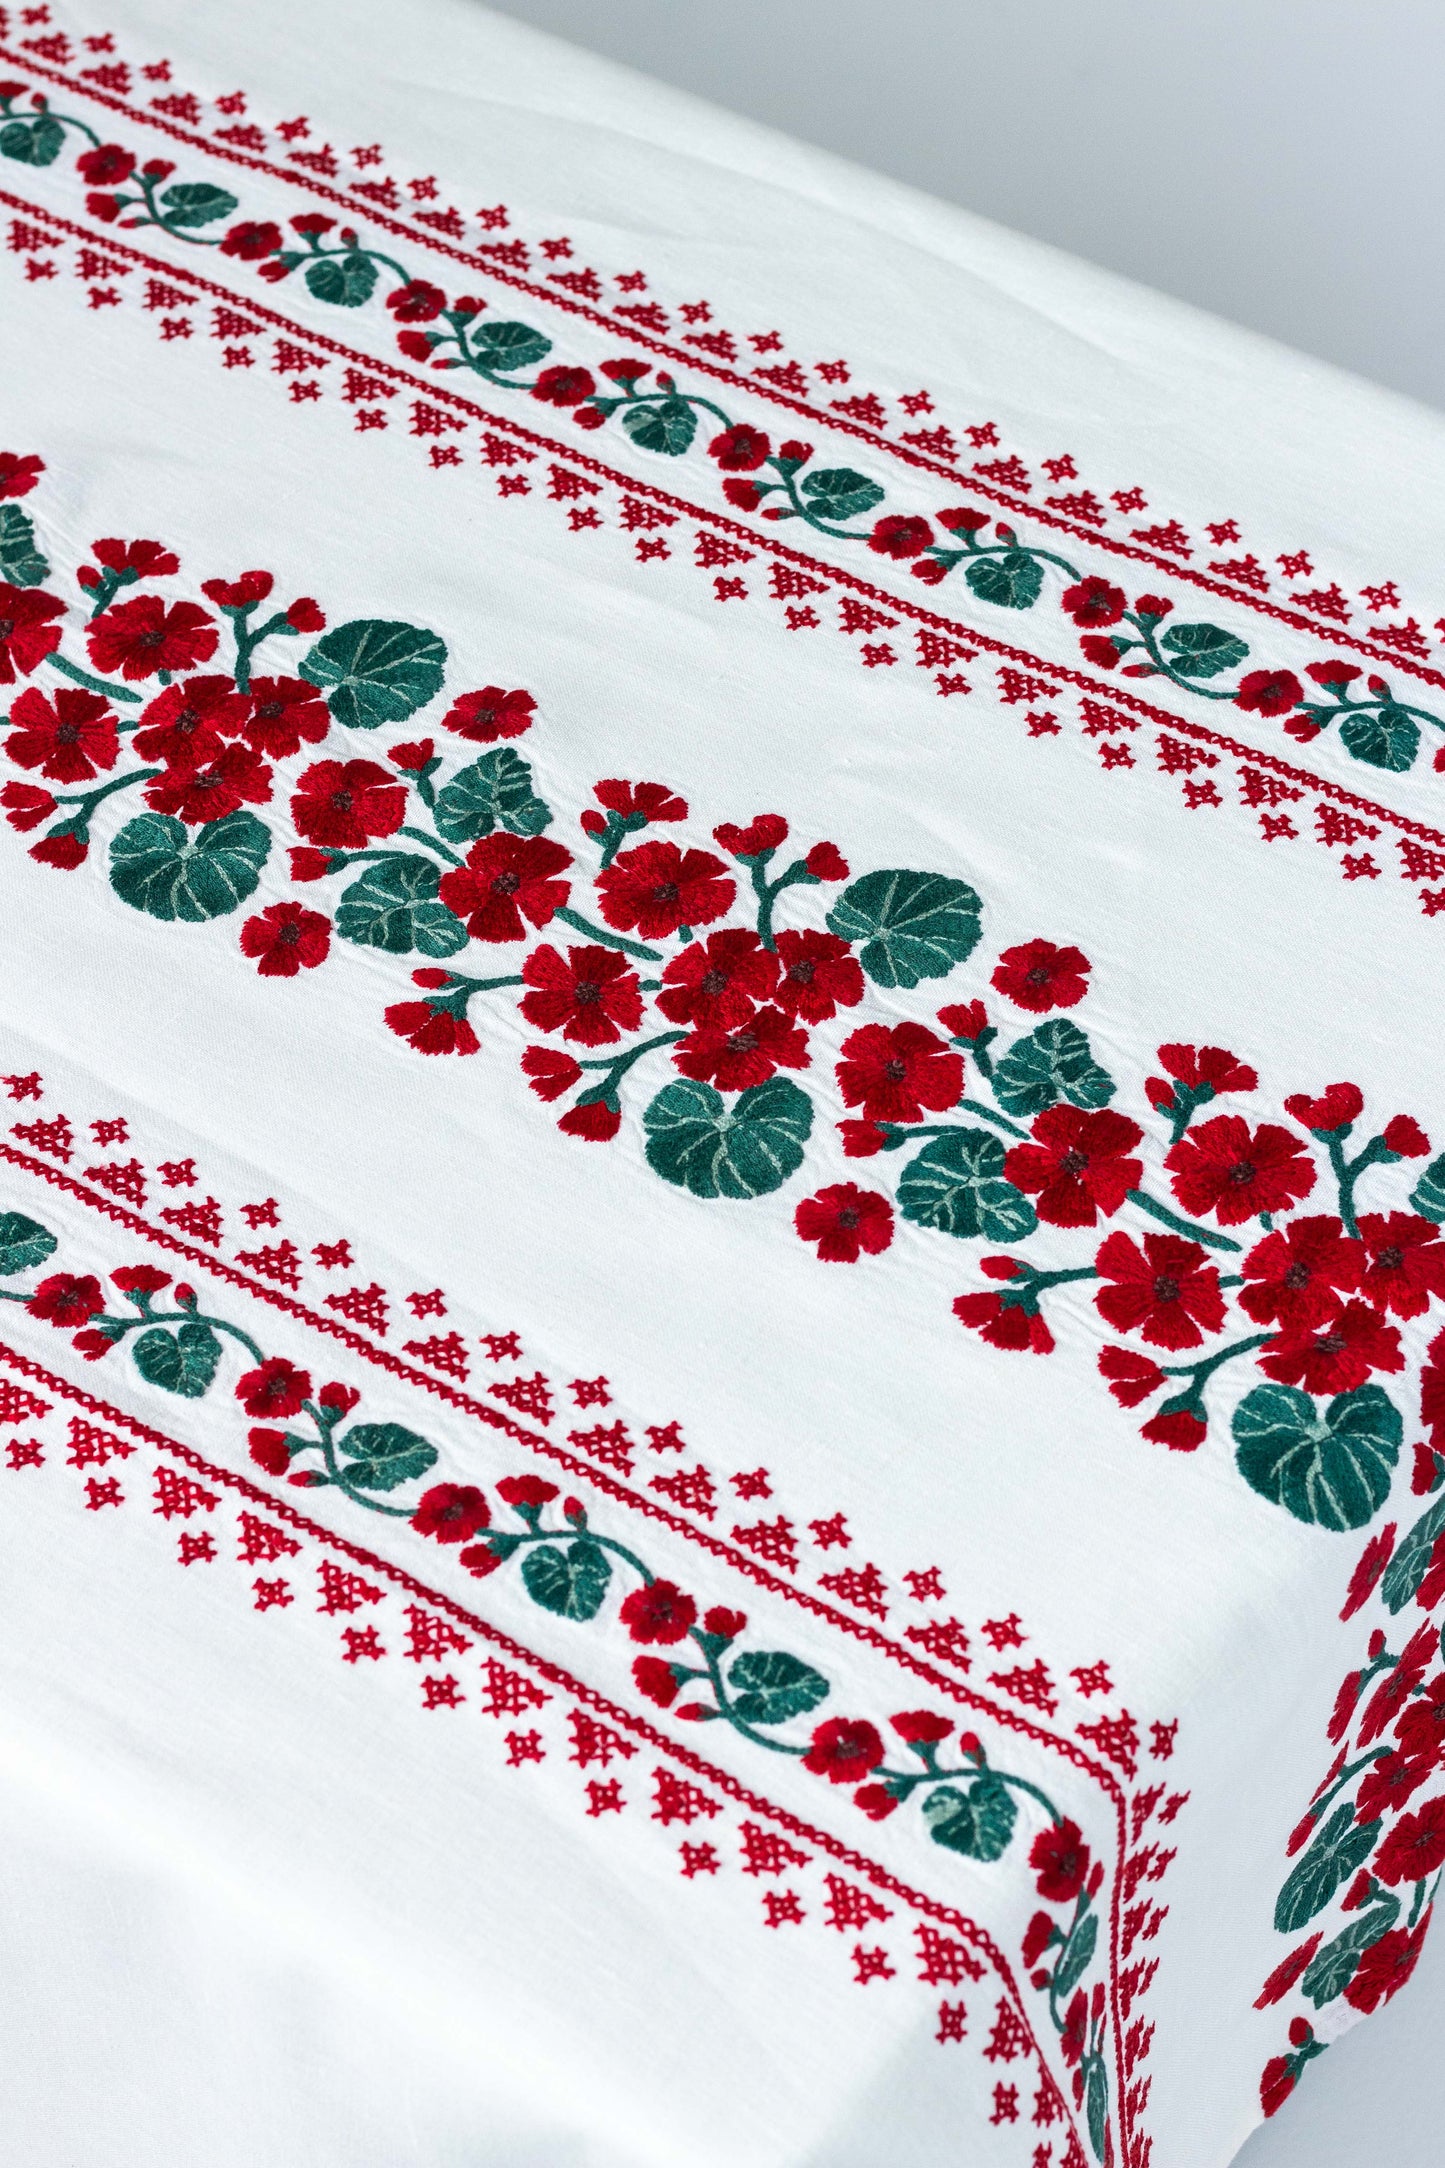 Geranio Rectangular Tablecloth for 8